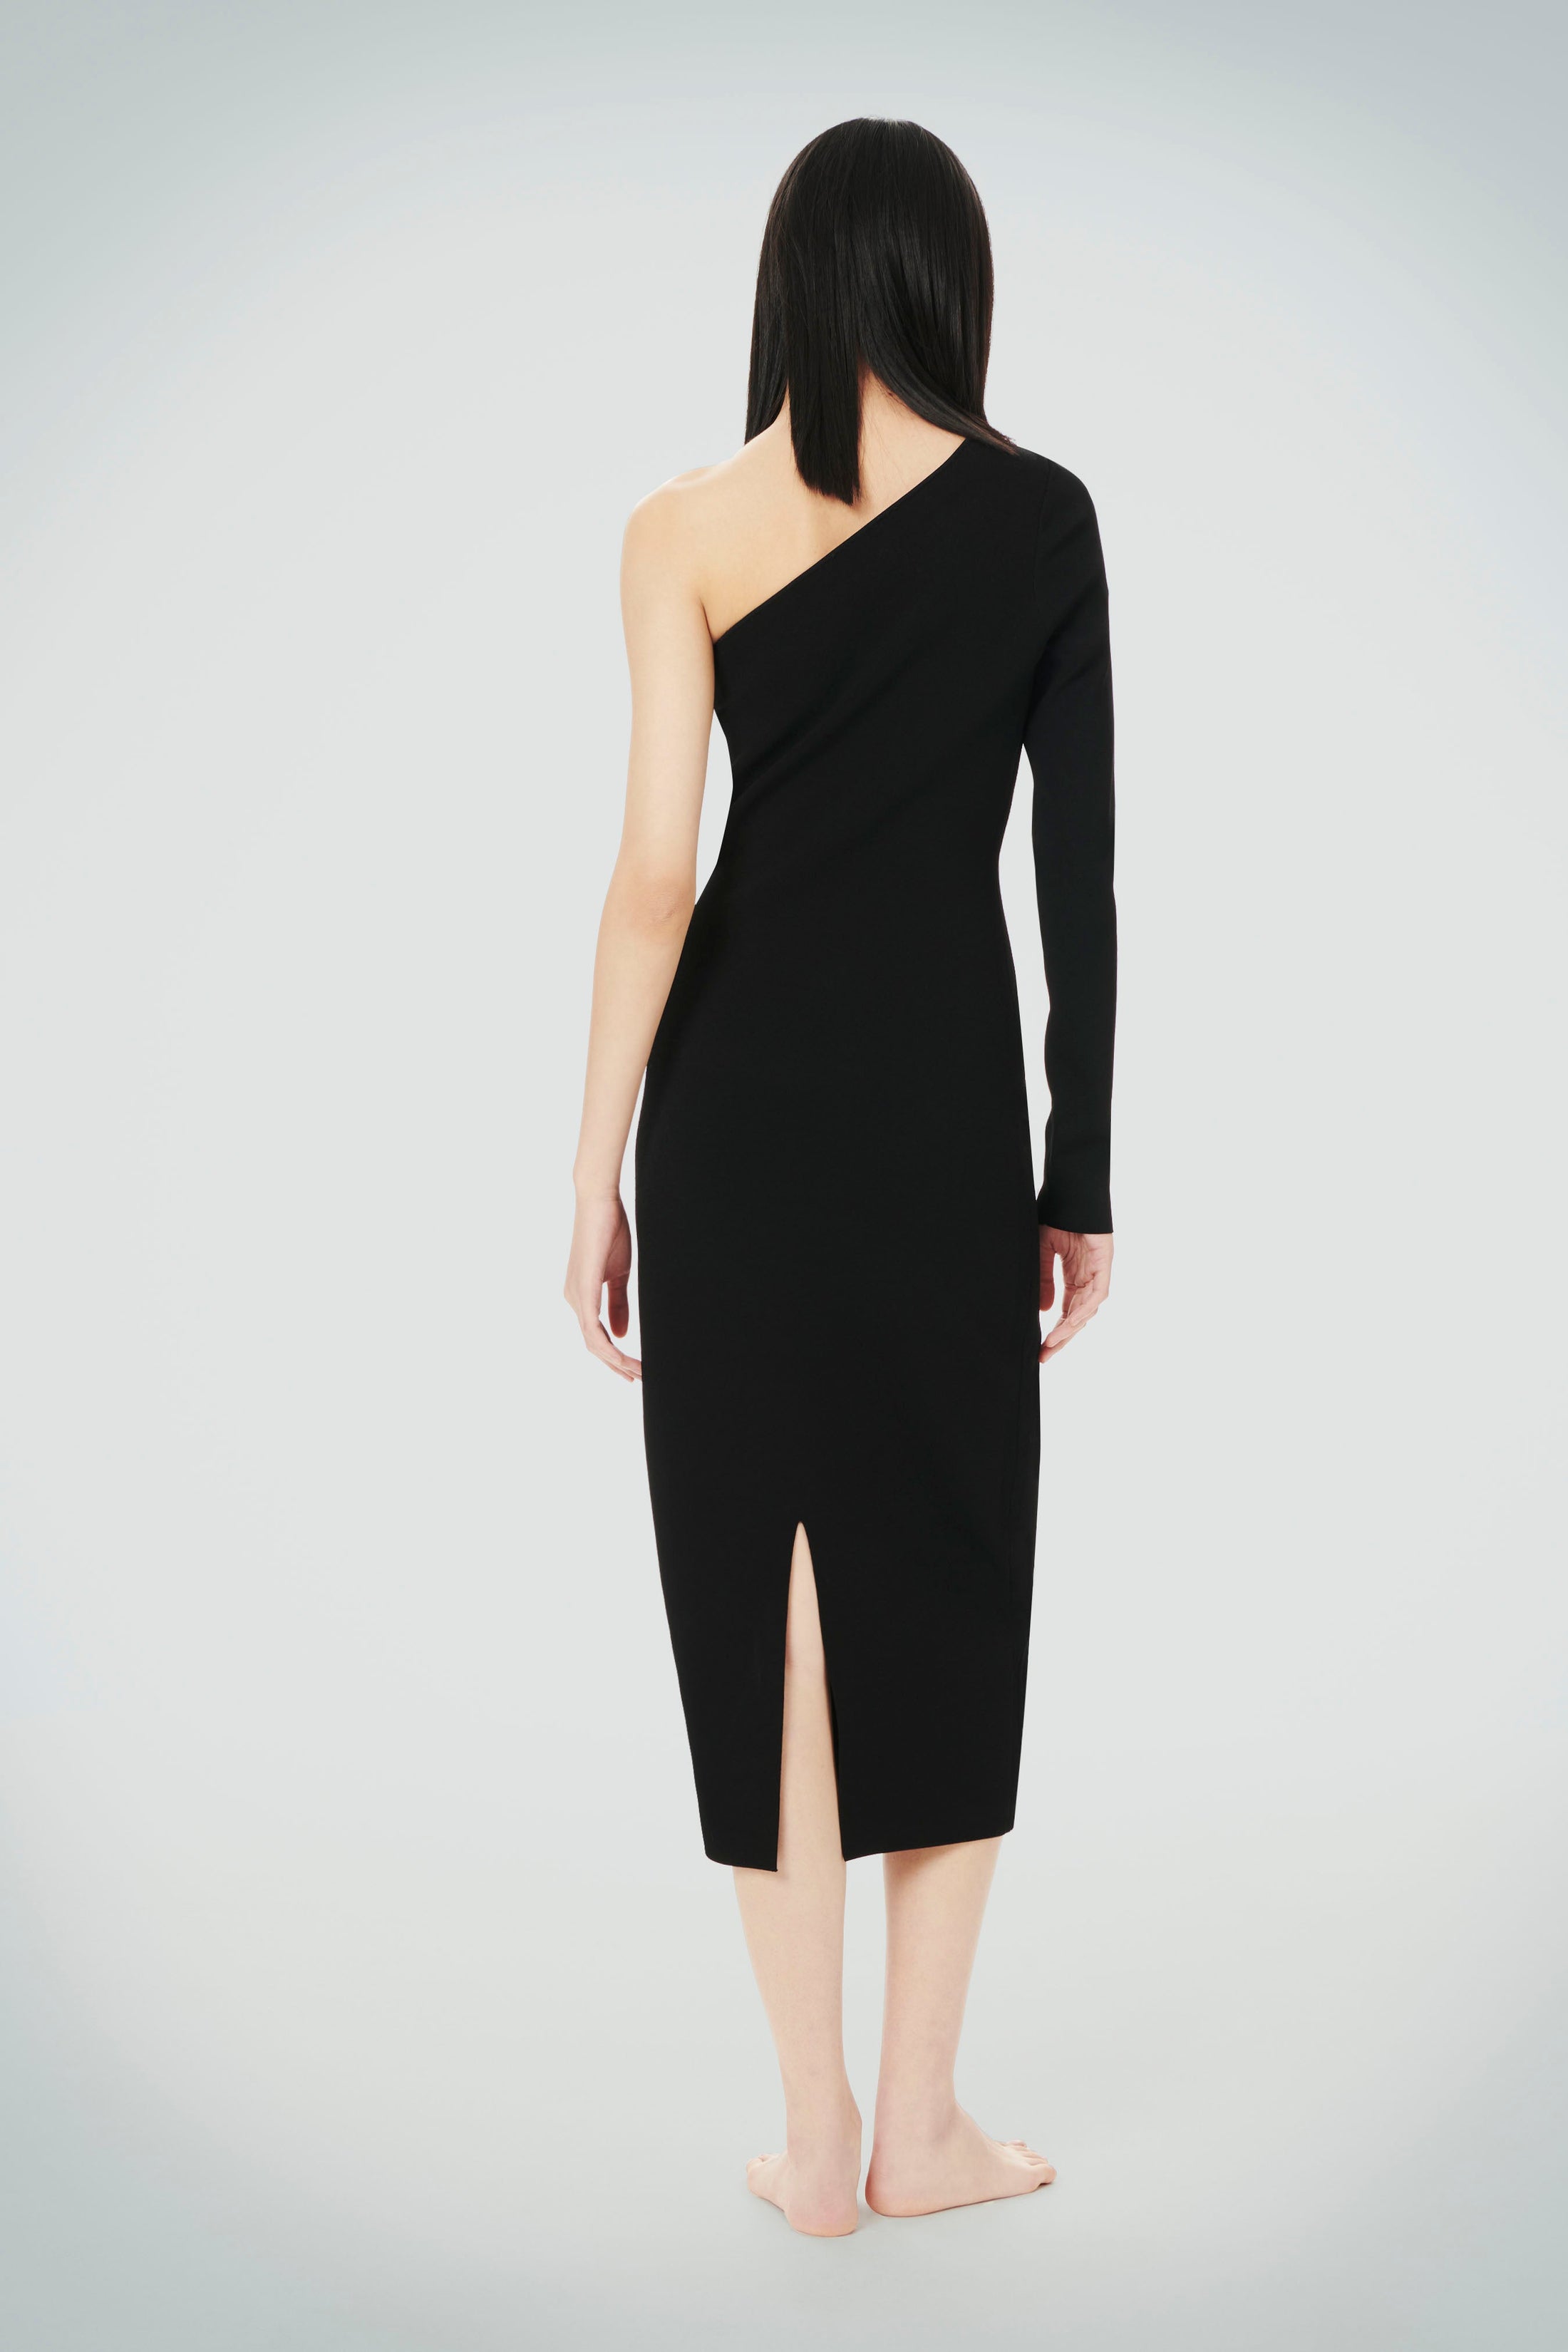 Victoria Beckham | VB Body One Shoulder Midi Dress - Black